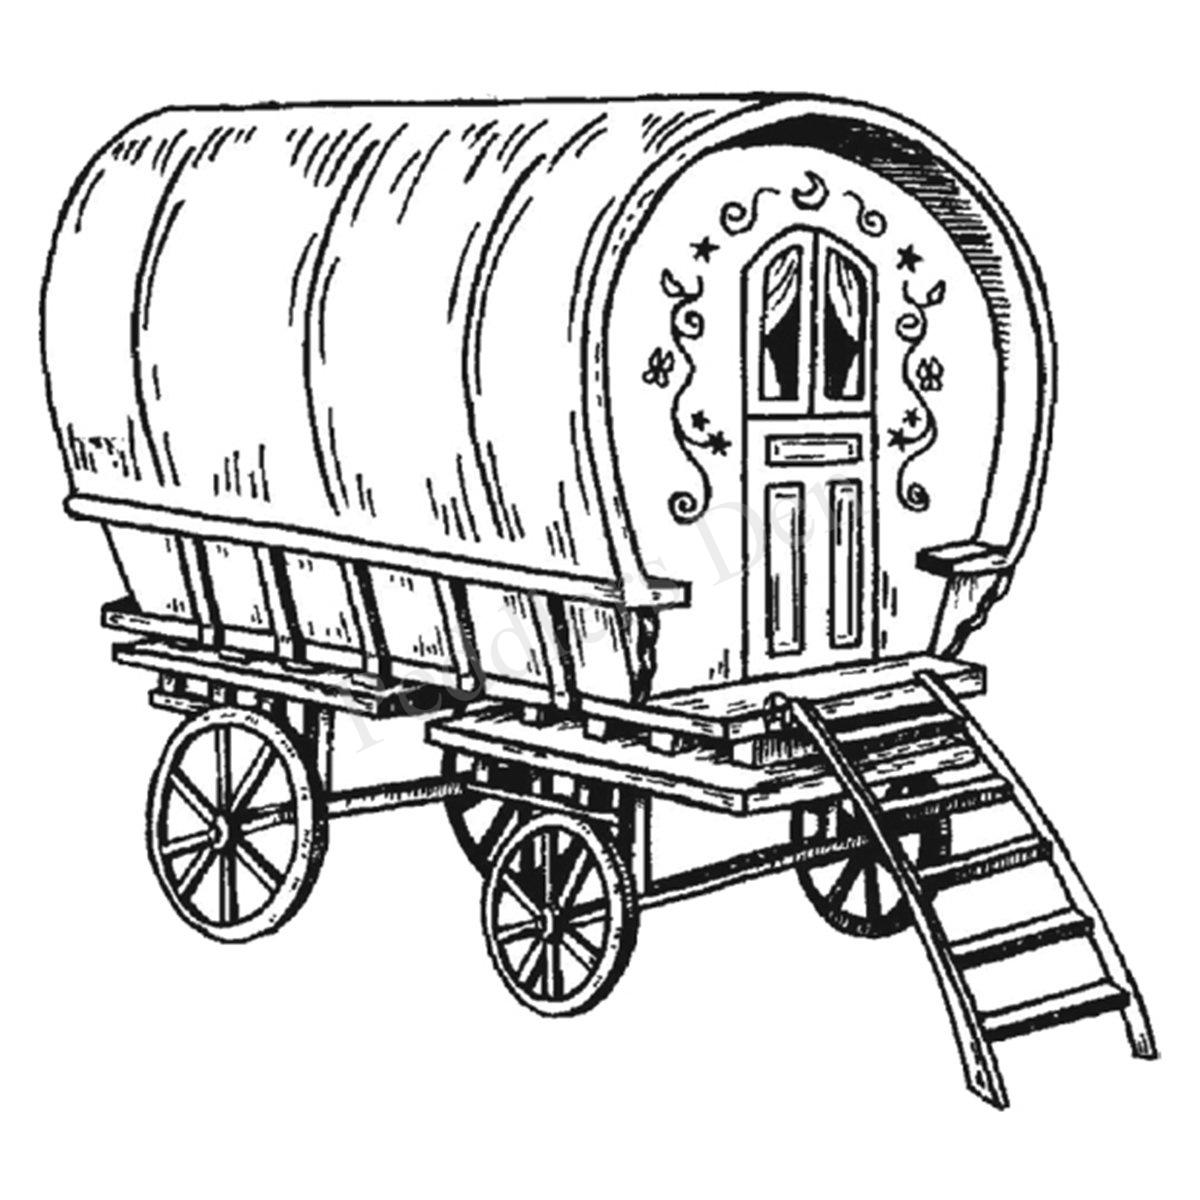 Humpback gypsy wagon small p